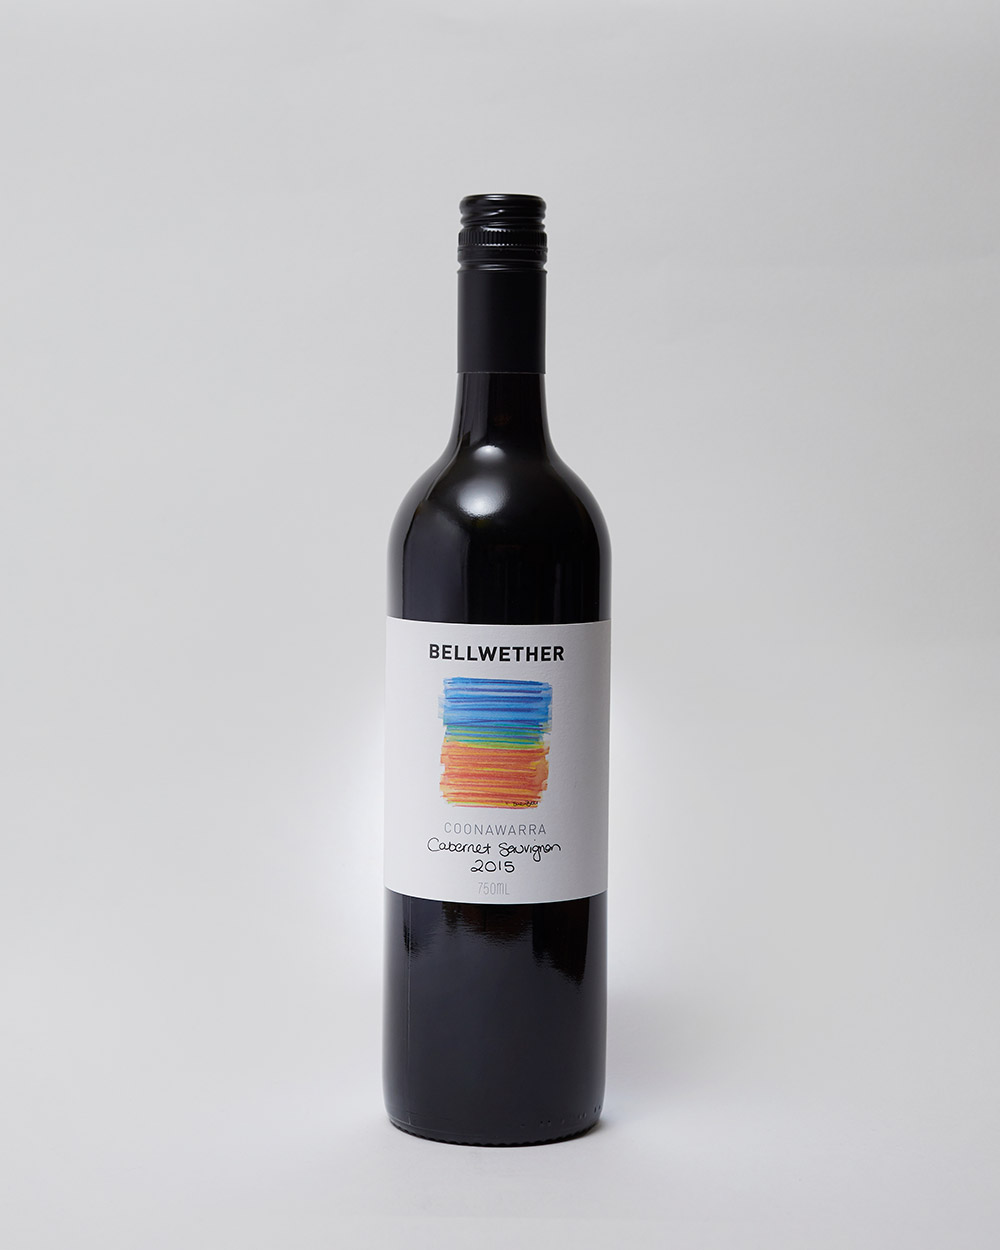 Bellwether Coonawarra Cabernet Sauvignon 2015 wine